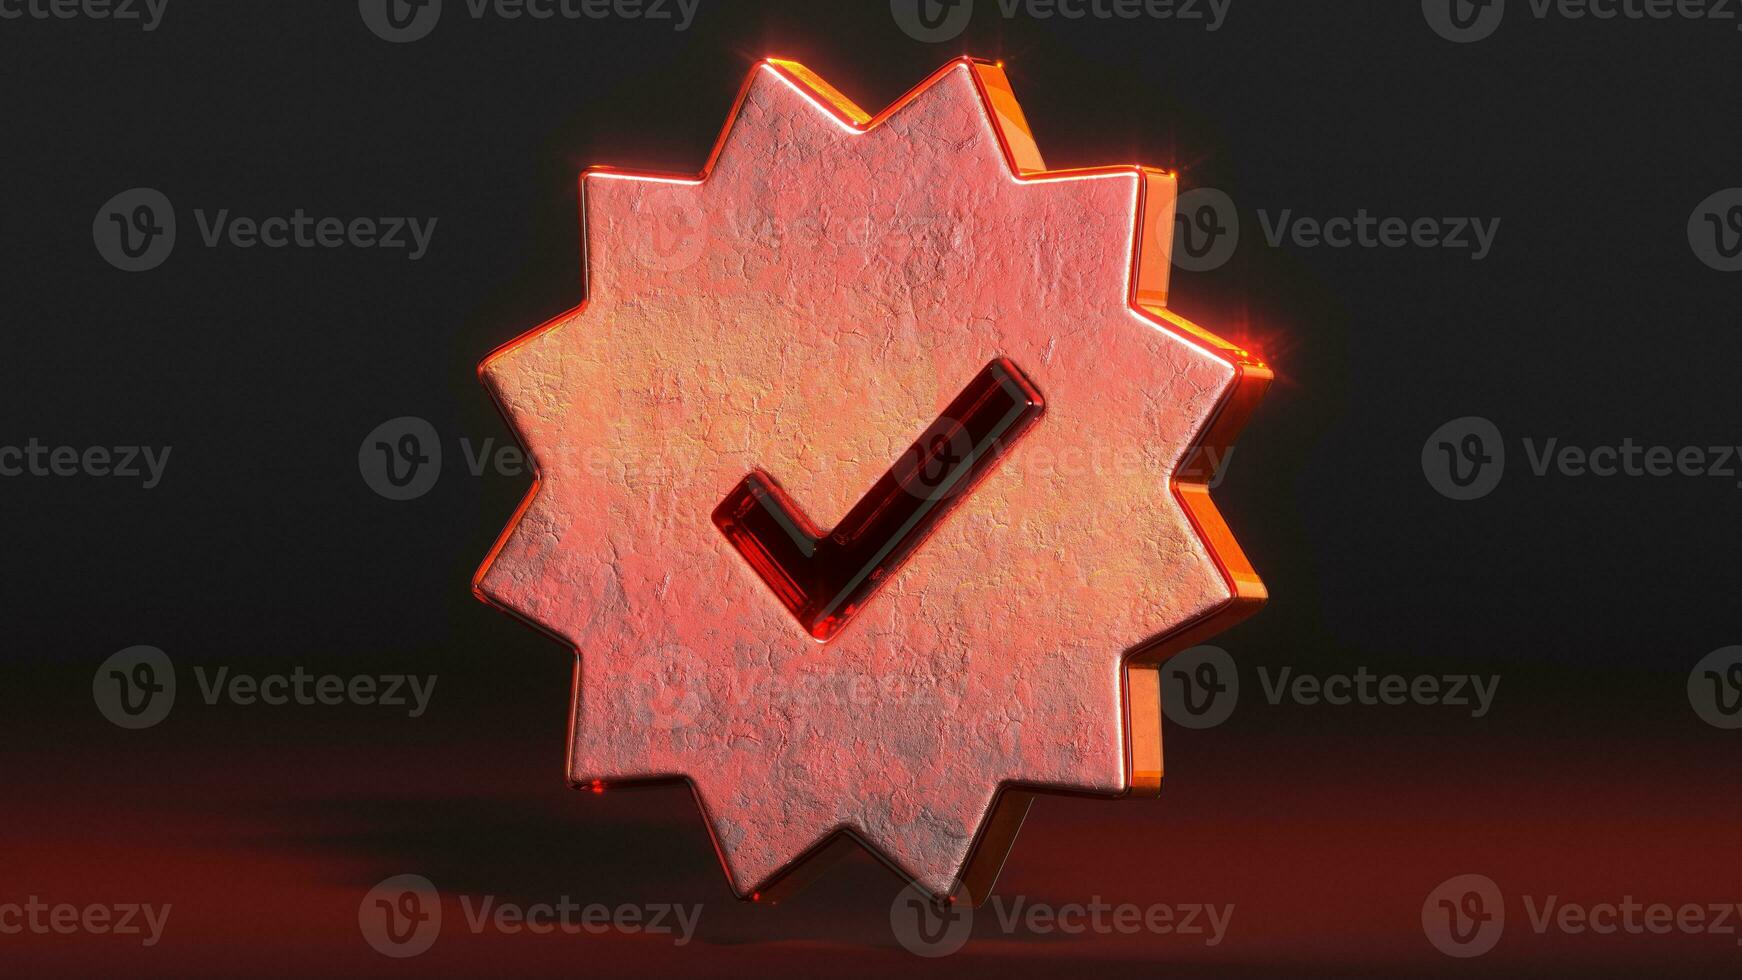 NeoPlush Verification Emblem photo